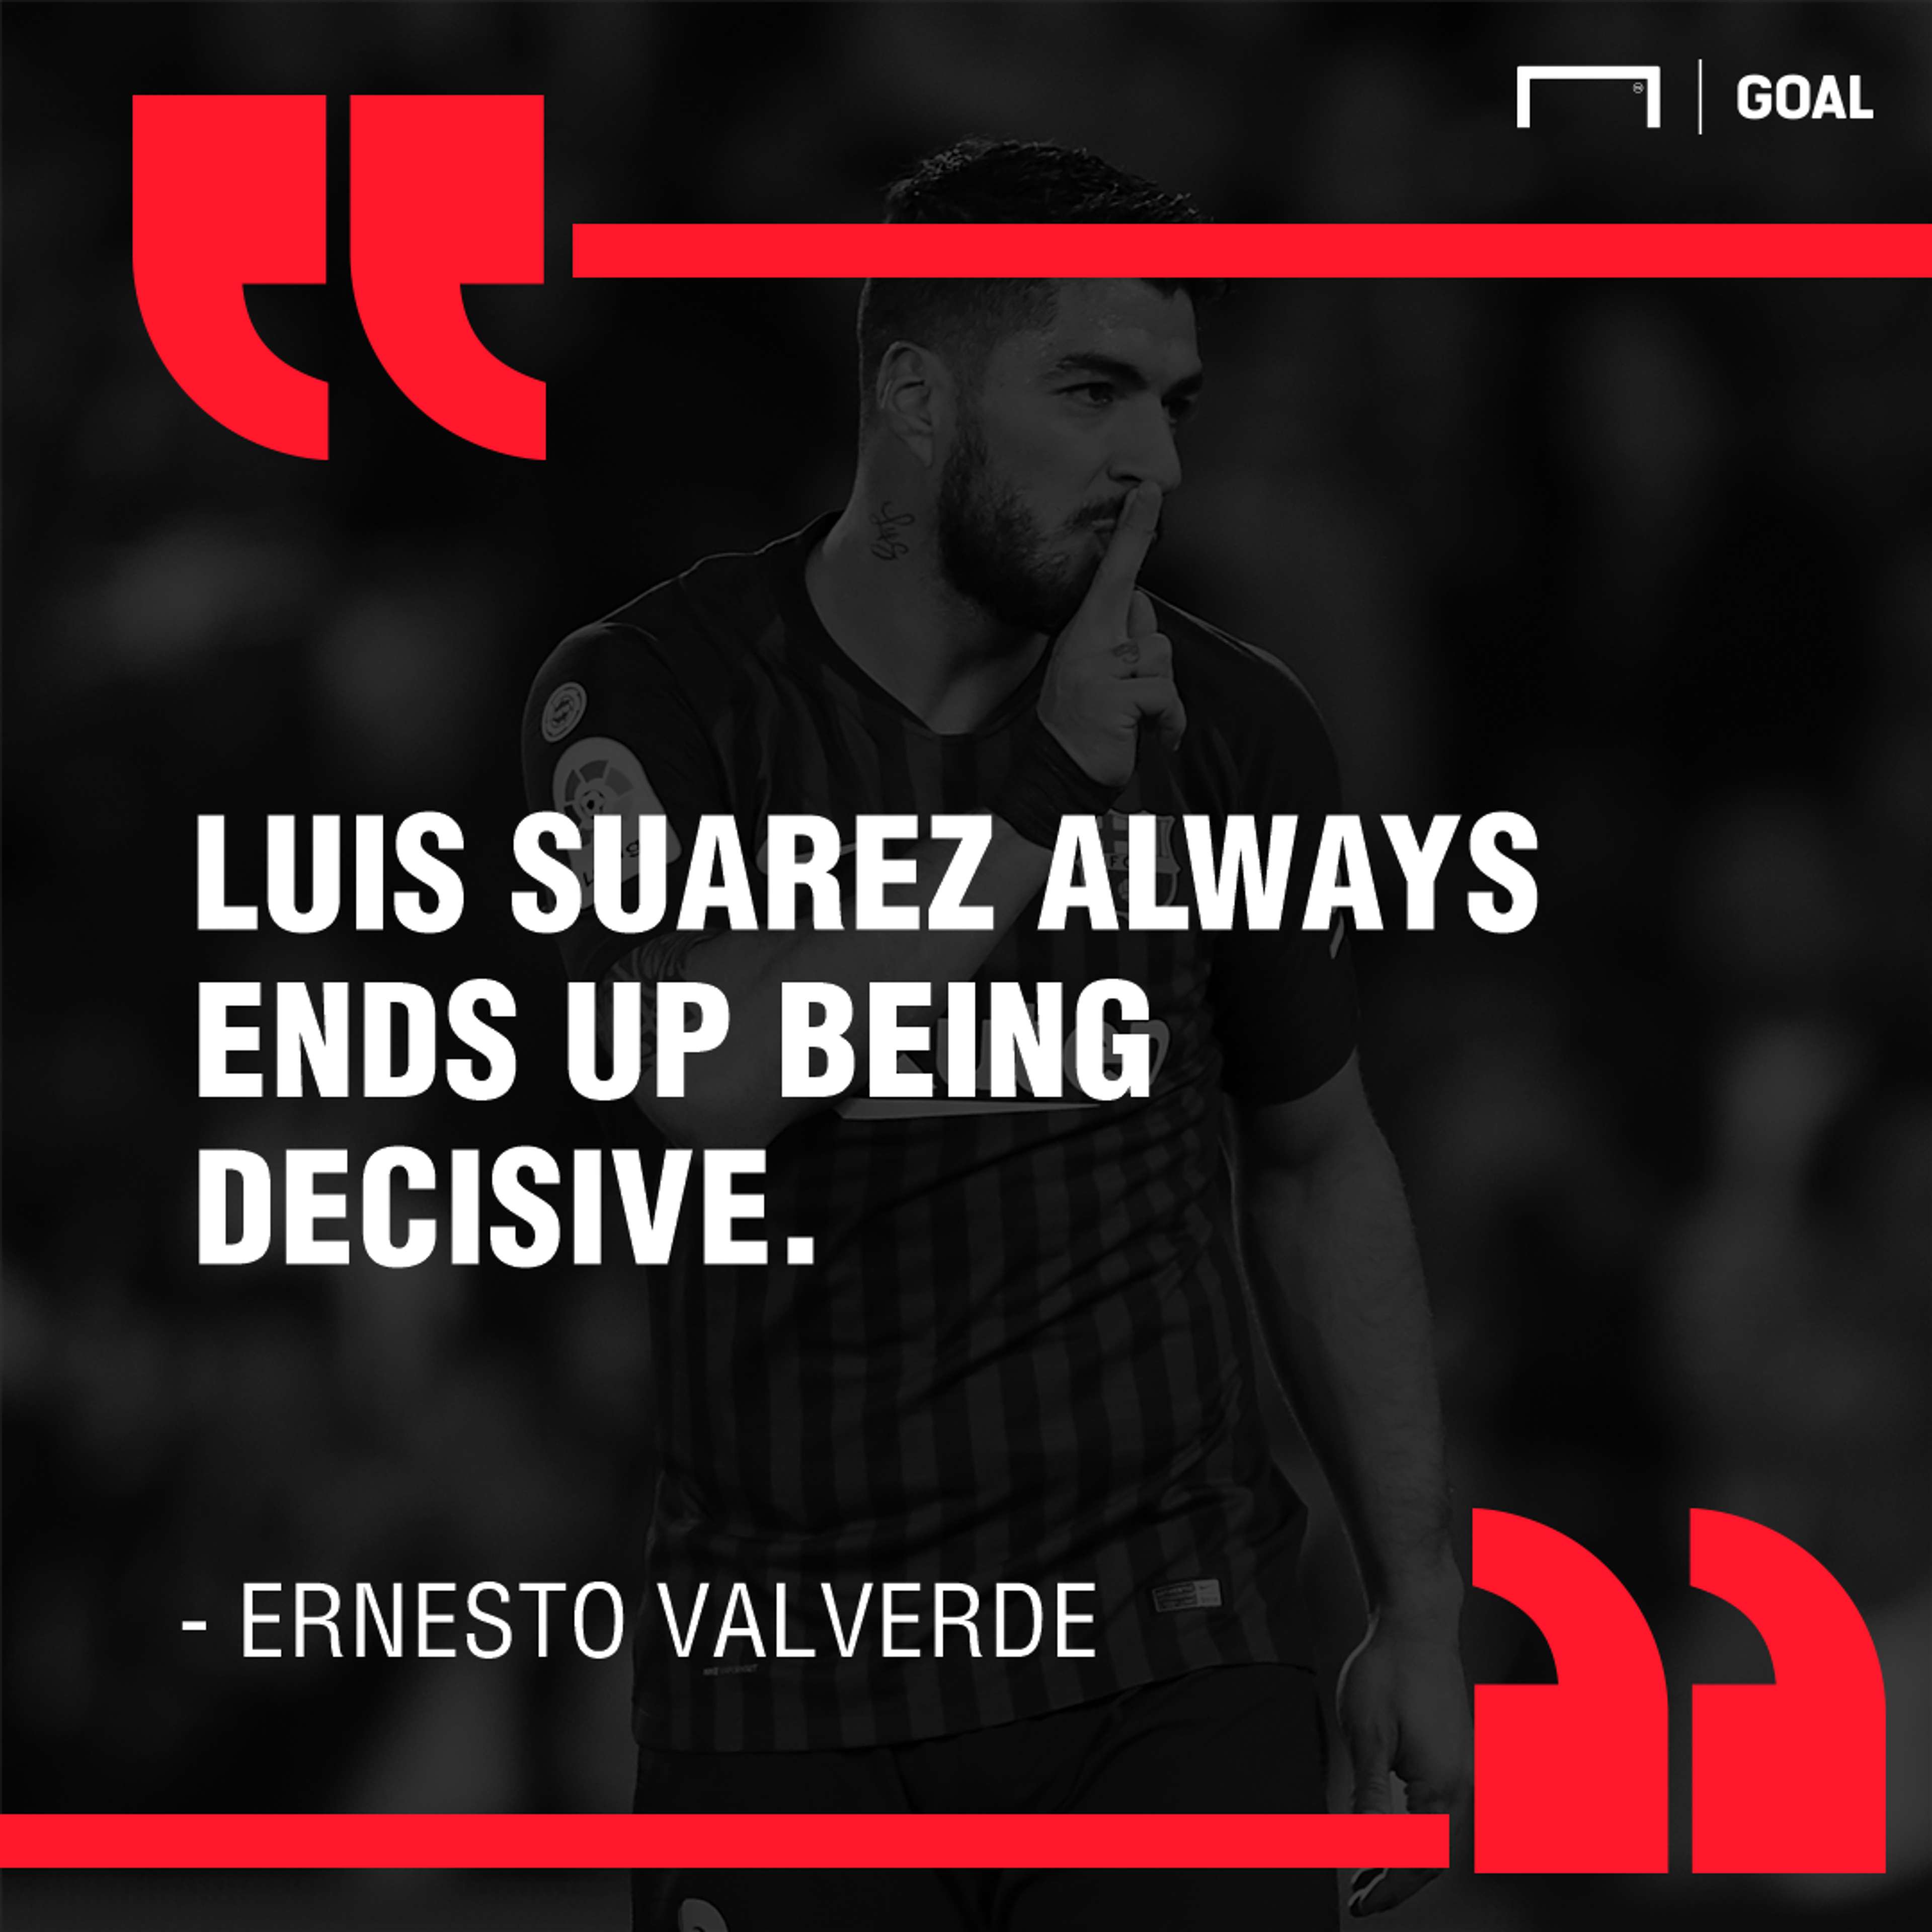 Suarez Valverde quote PS